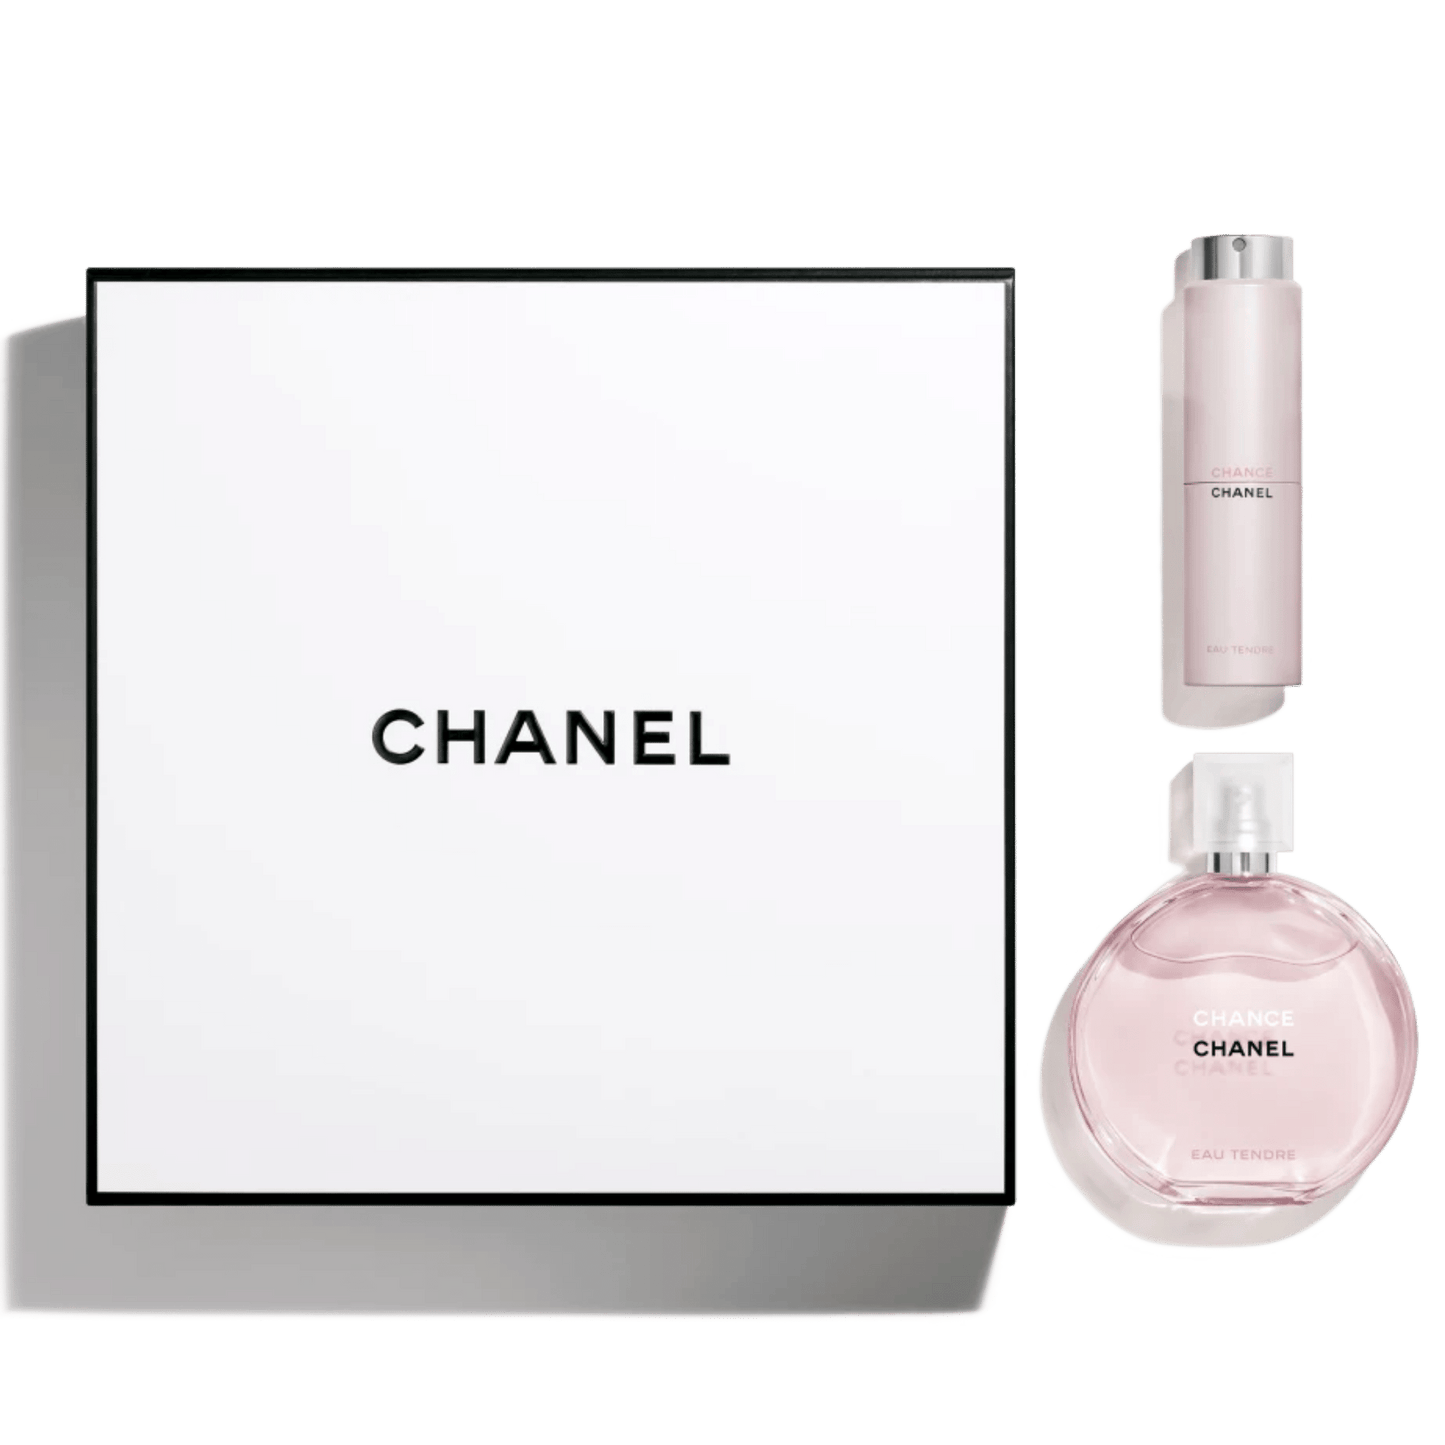 Chanel Coffret Signature Box Gift Set